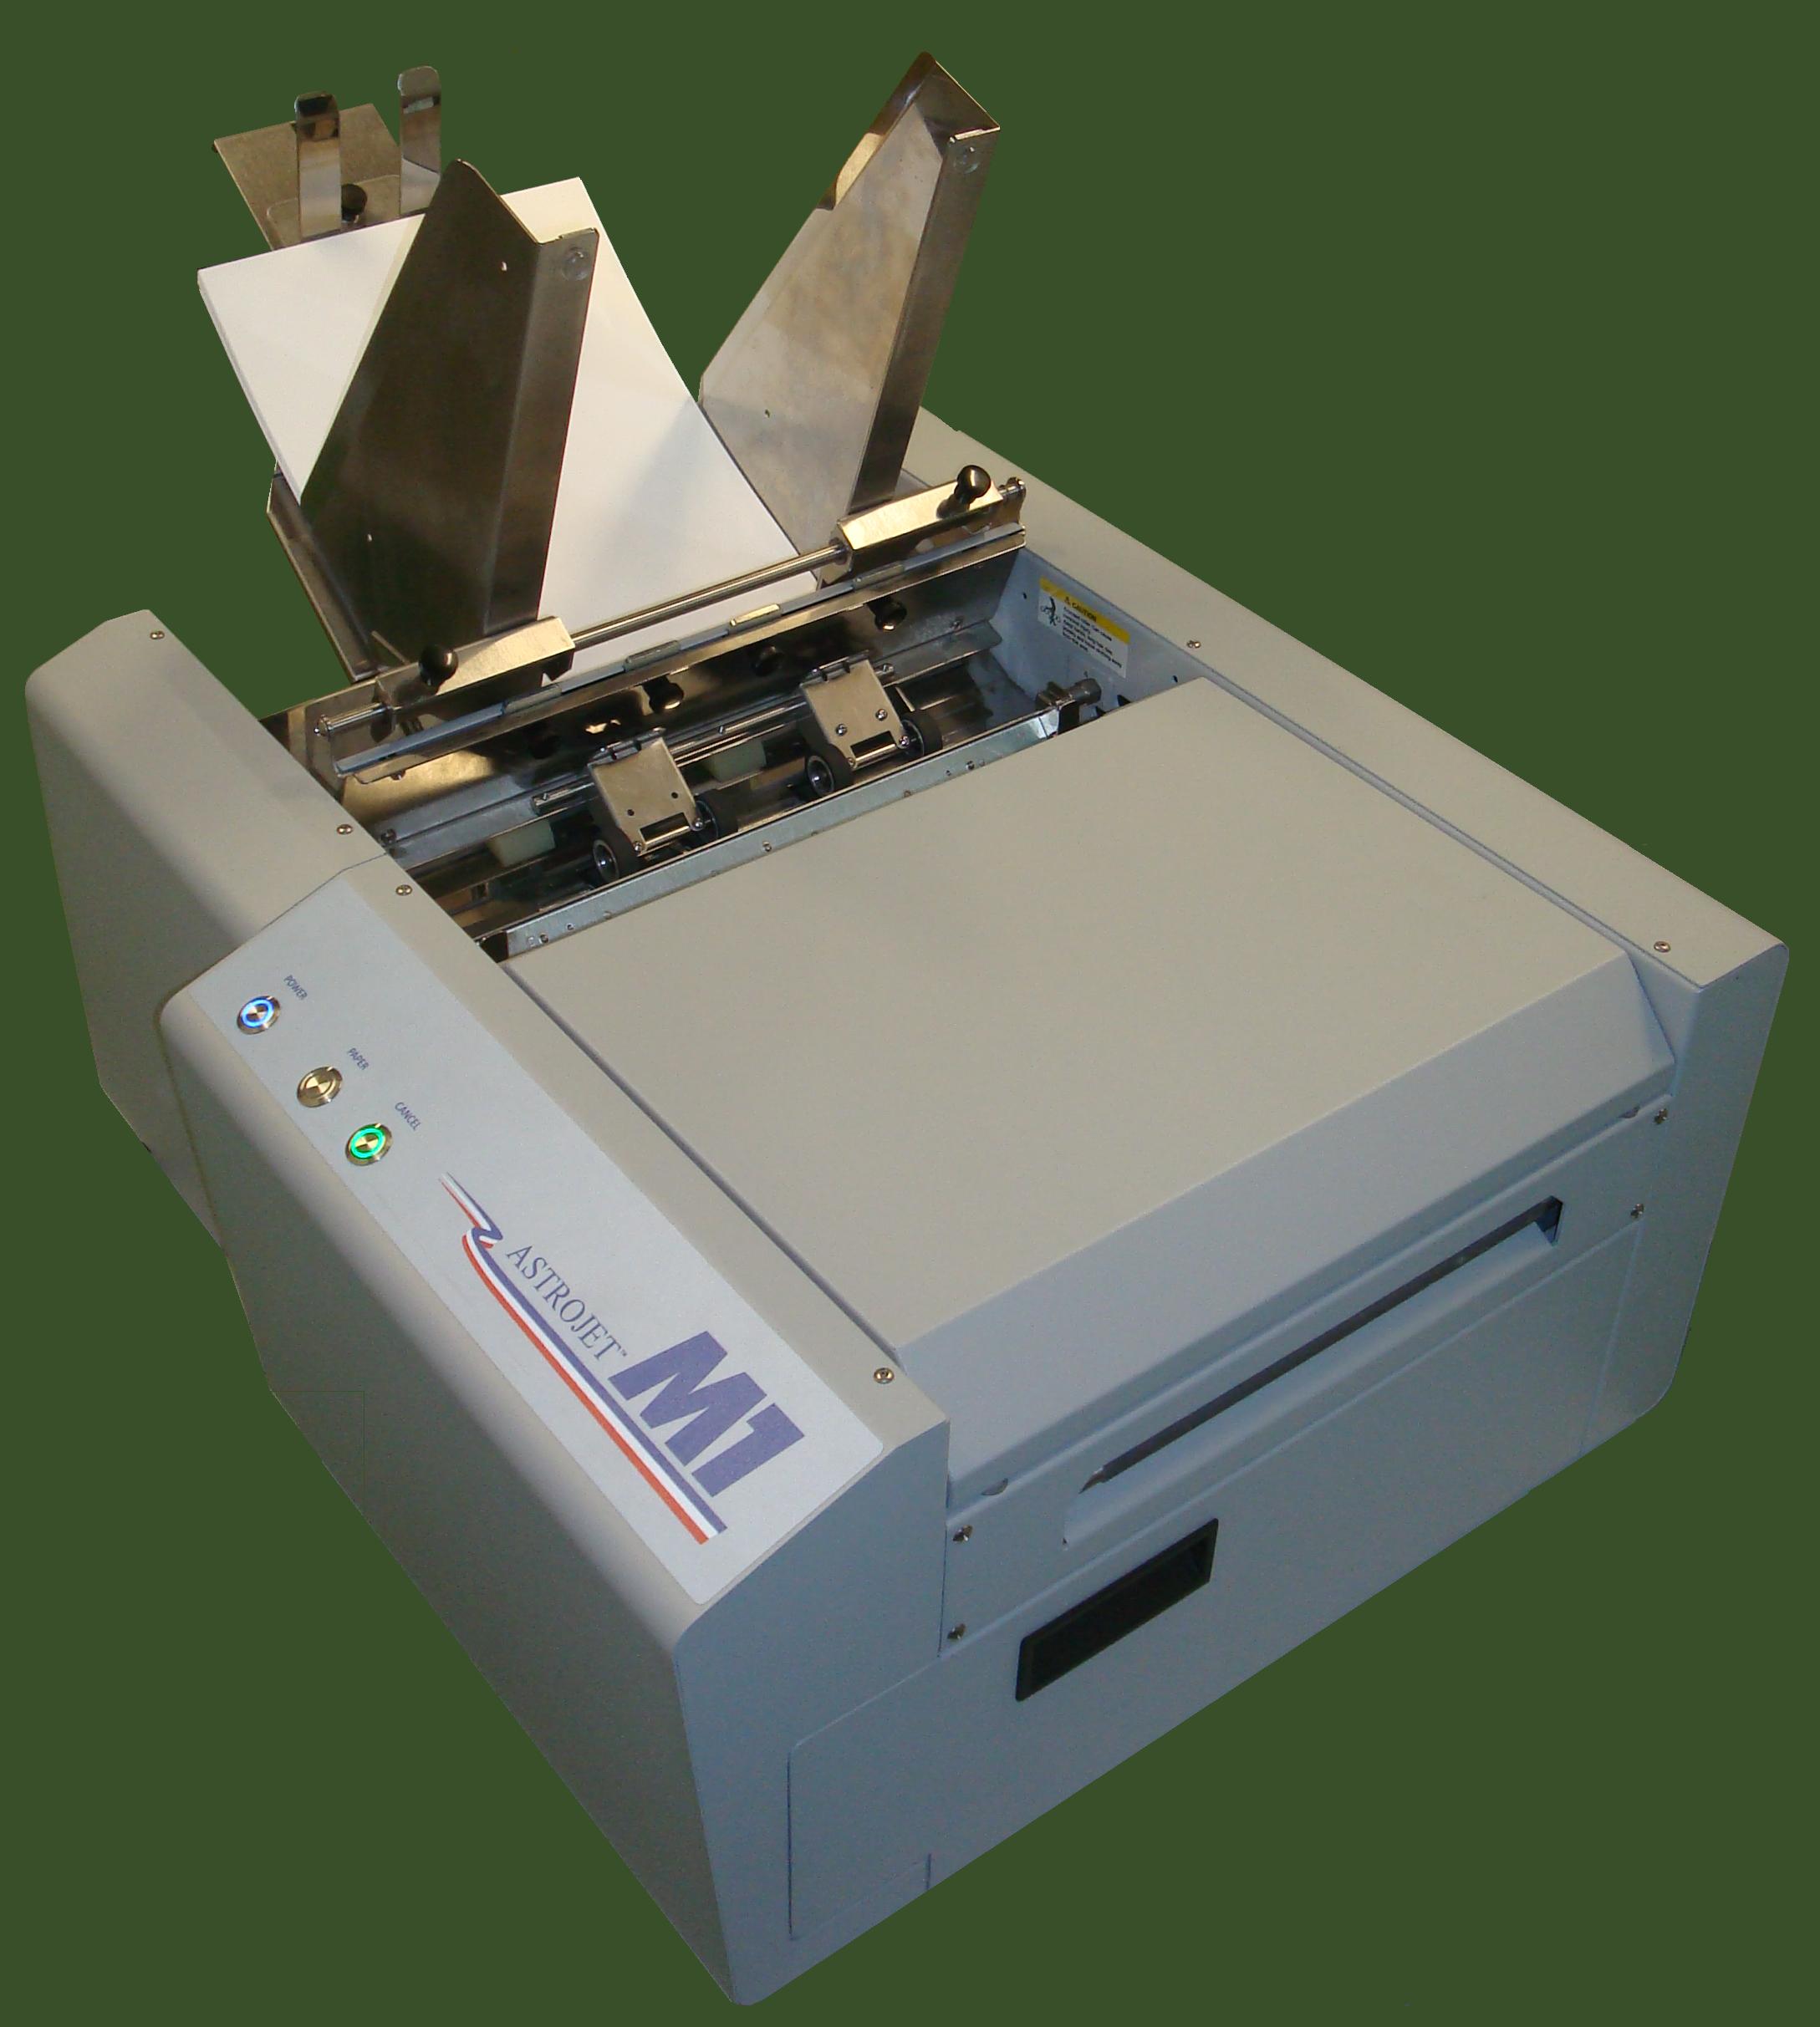 Imprimante jet d'encre adressage enveloppe et impression a4 astrojet m1_0